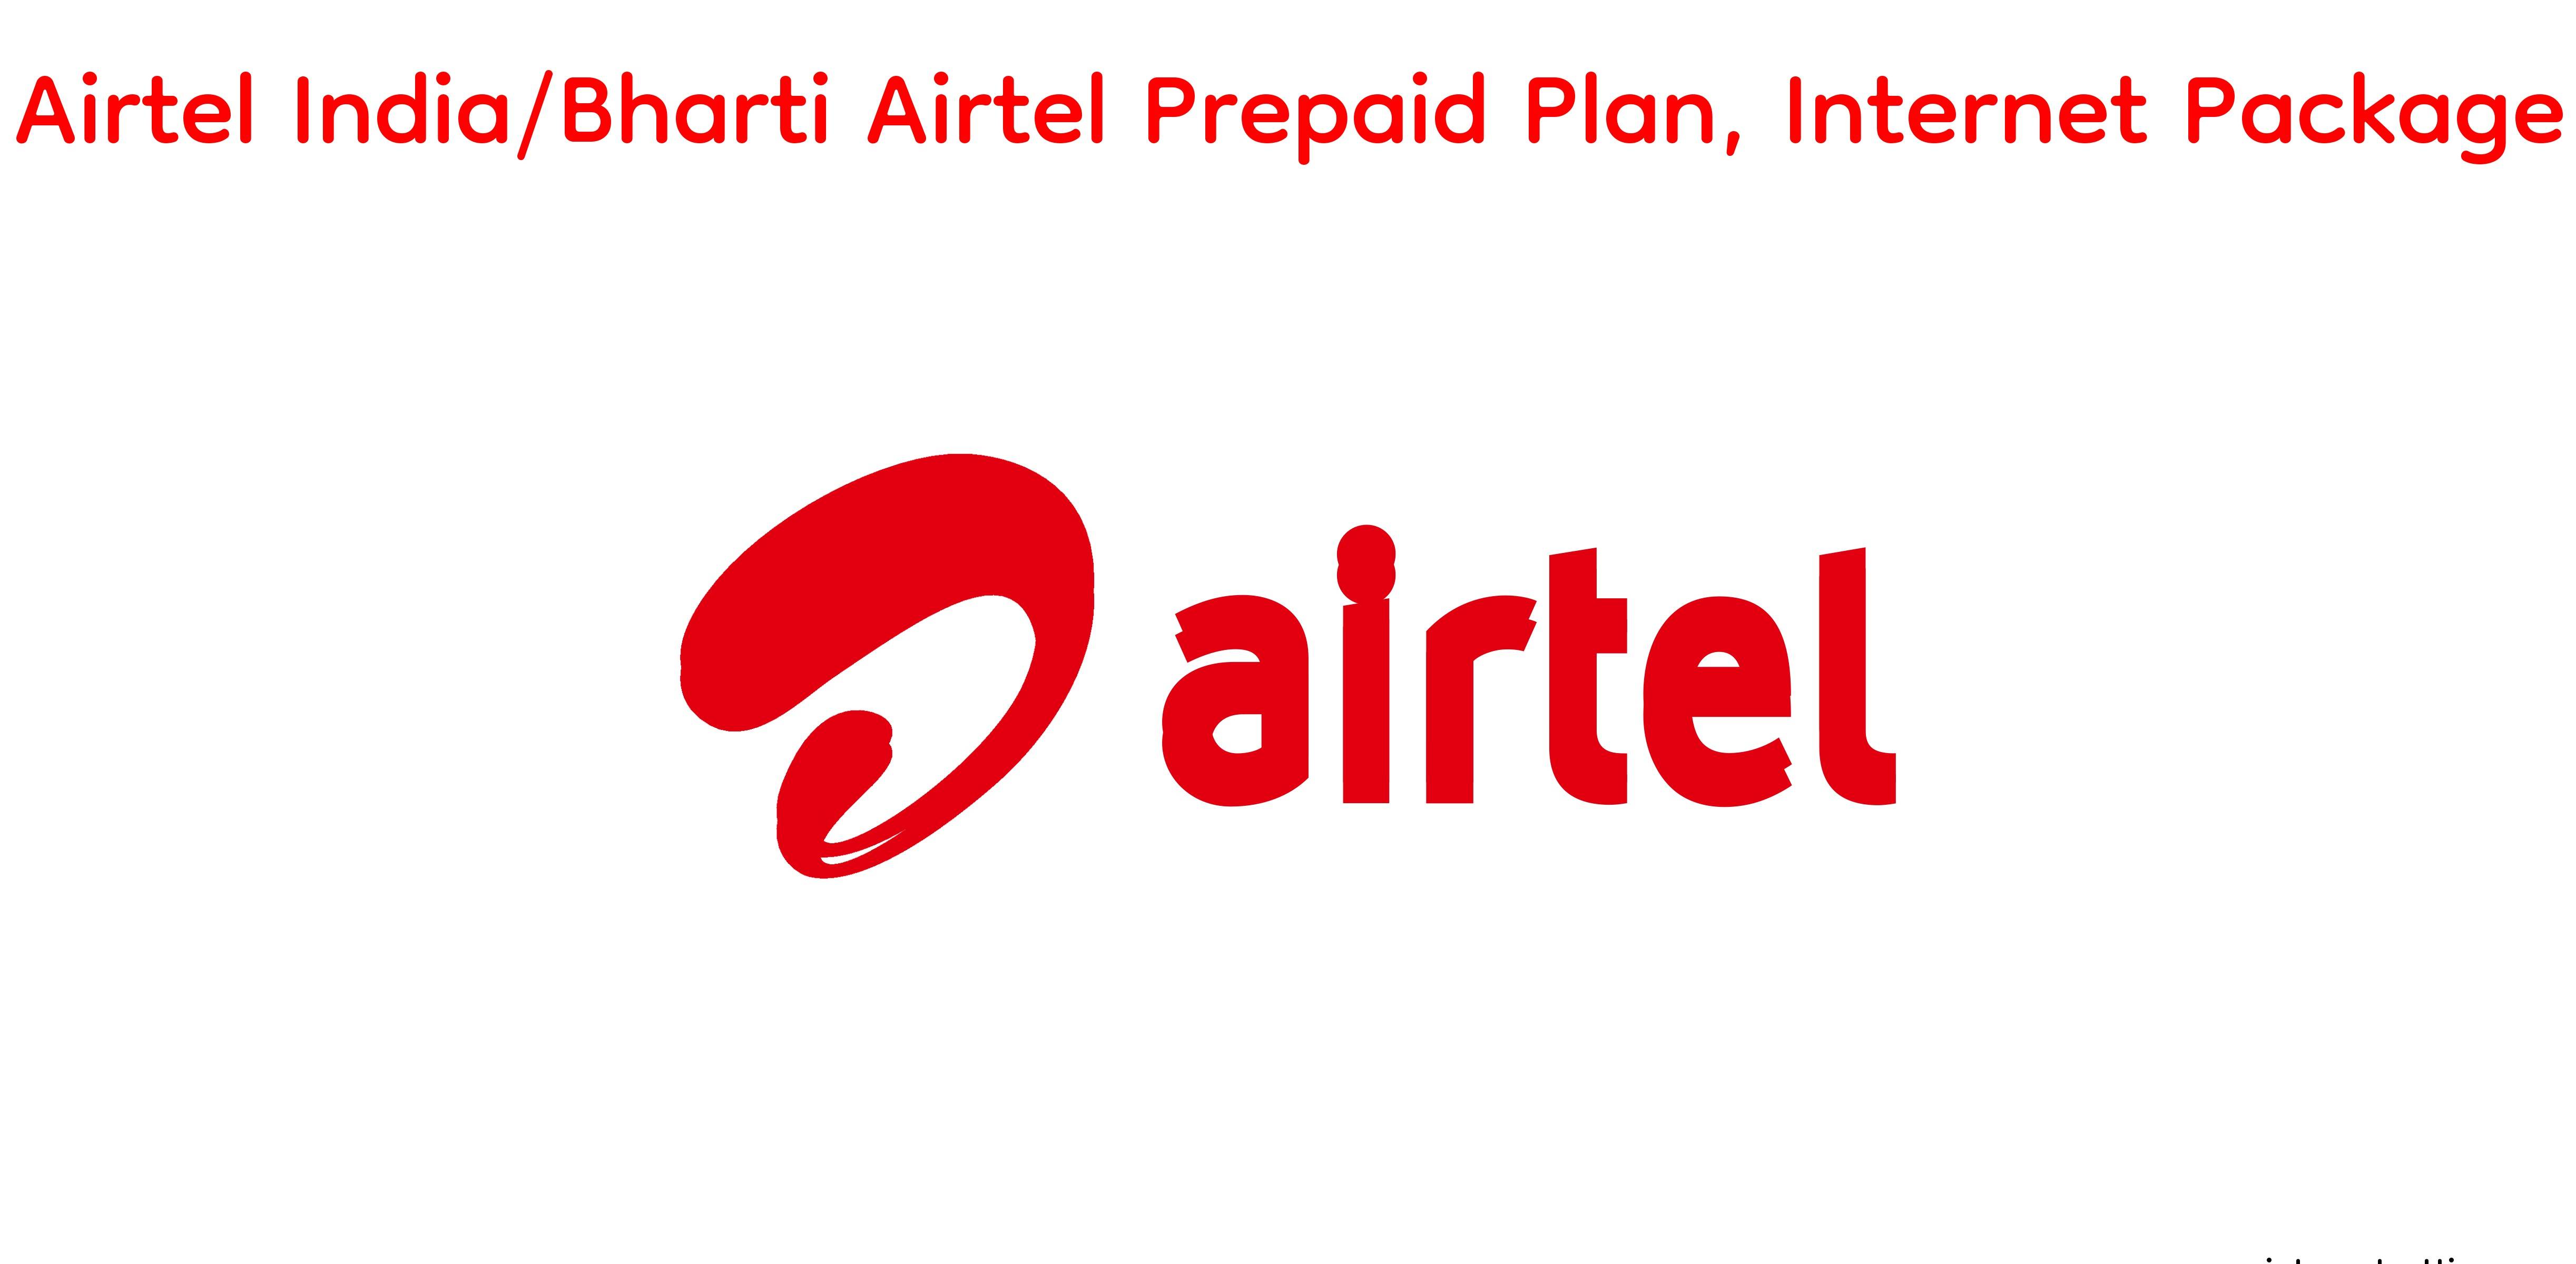 Airtel India Prepaid Plan internet Package Roaming 